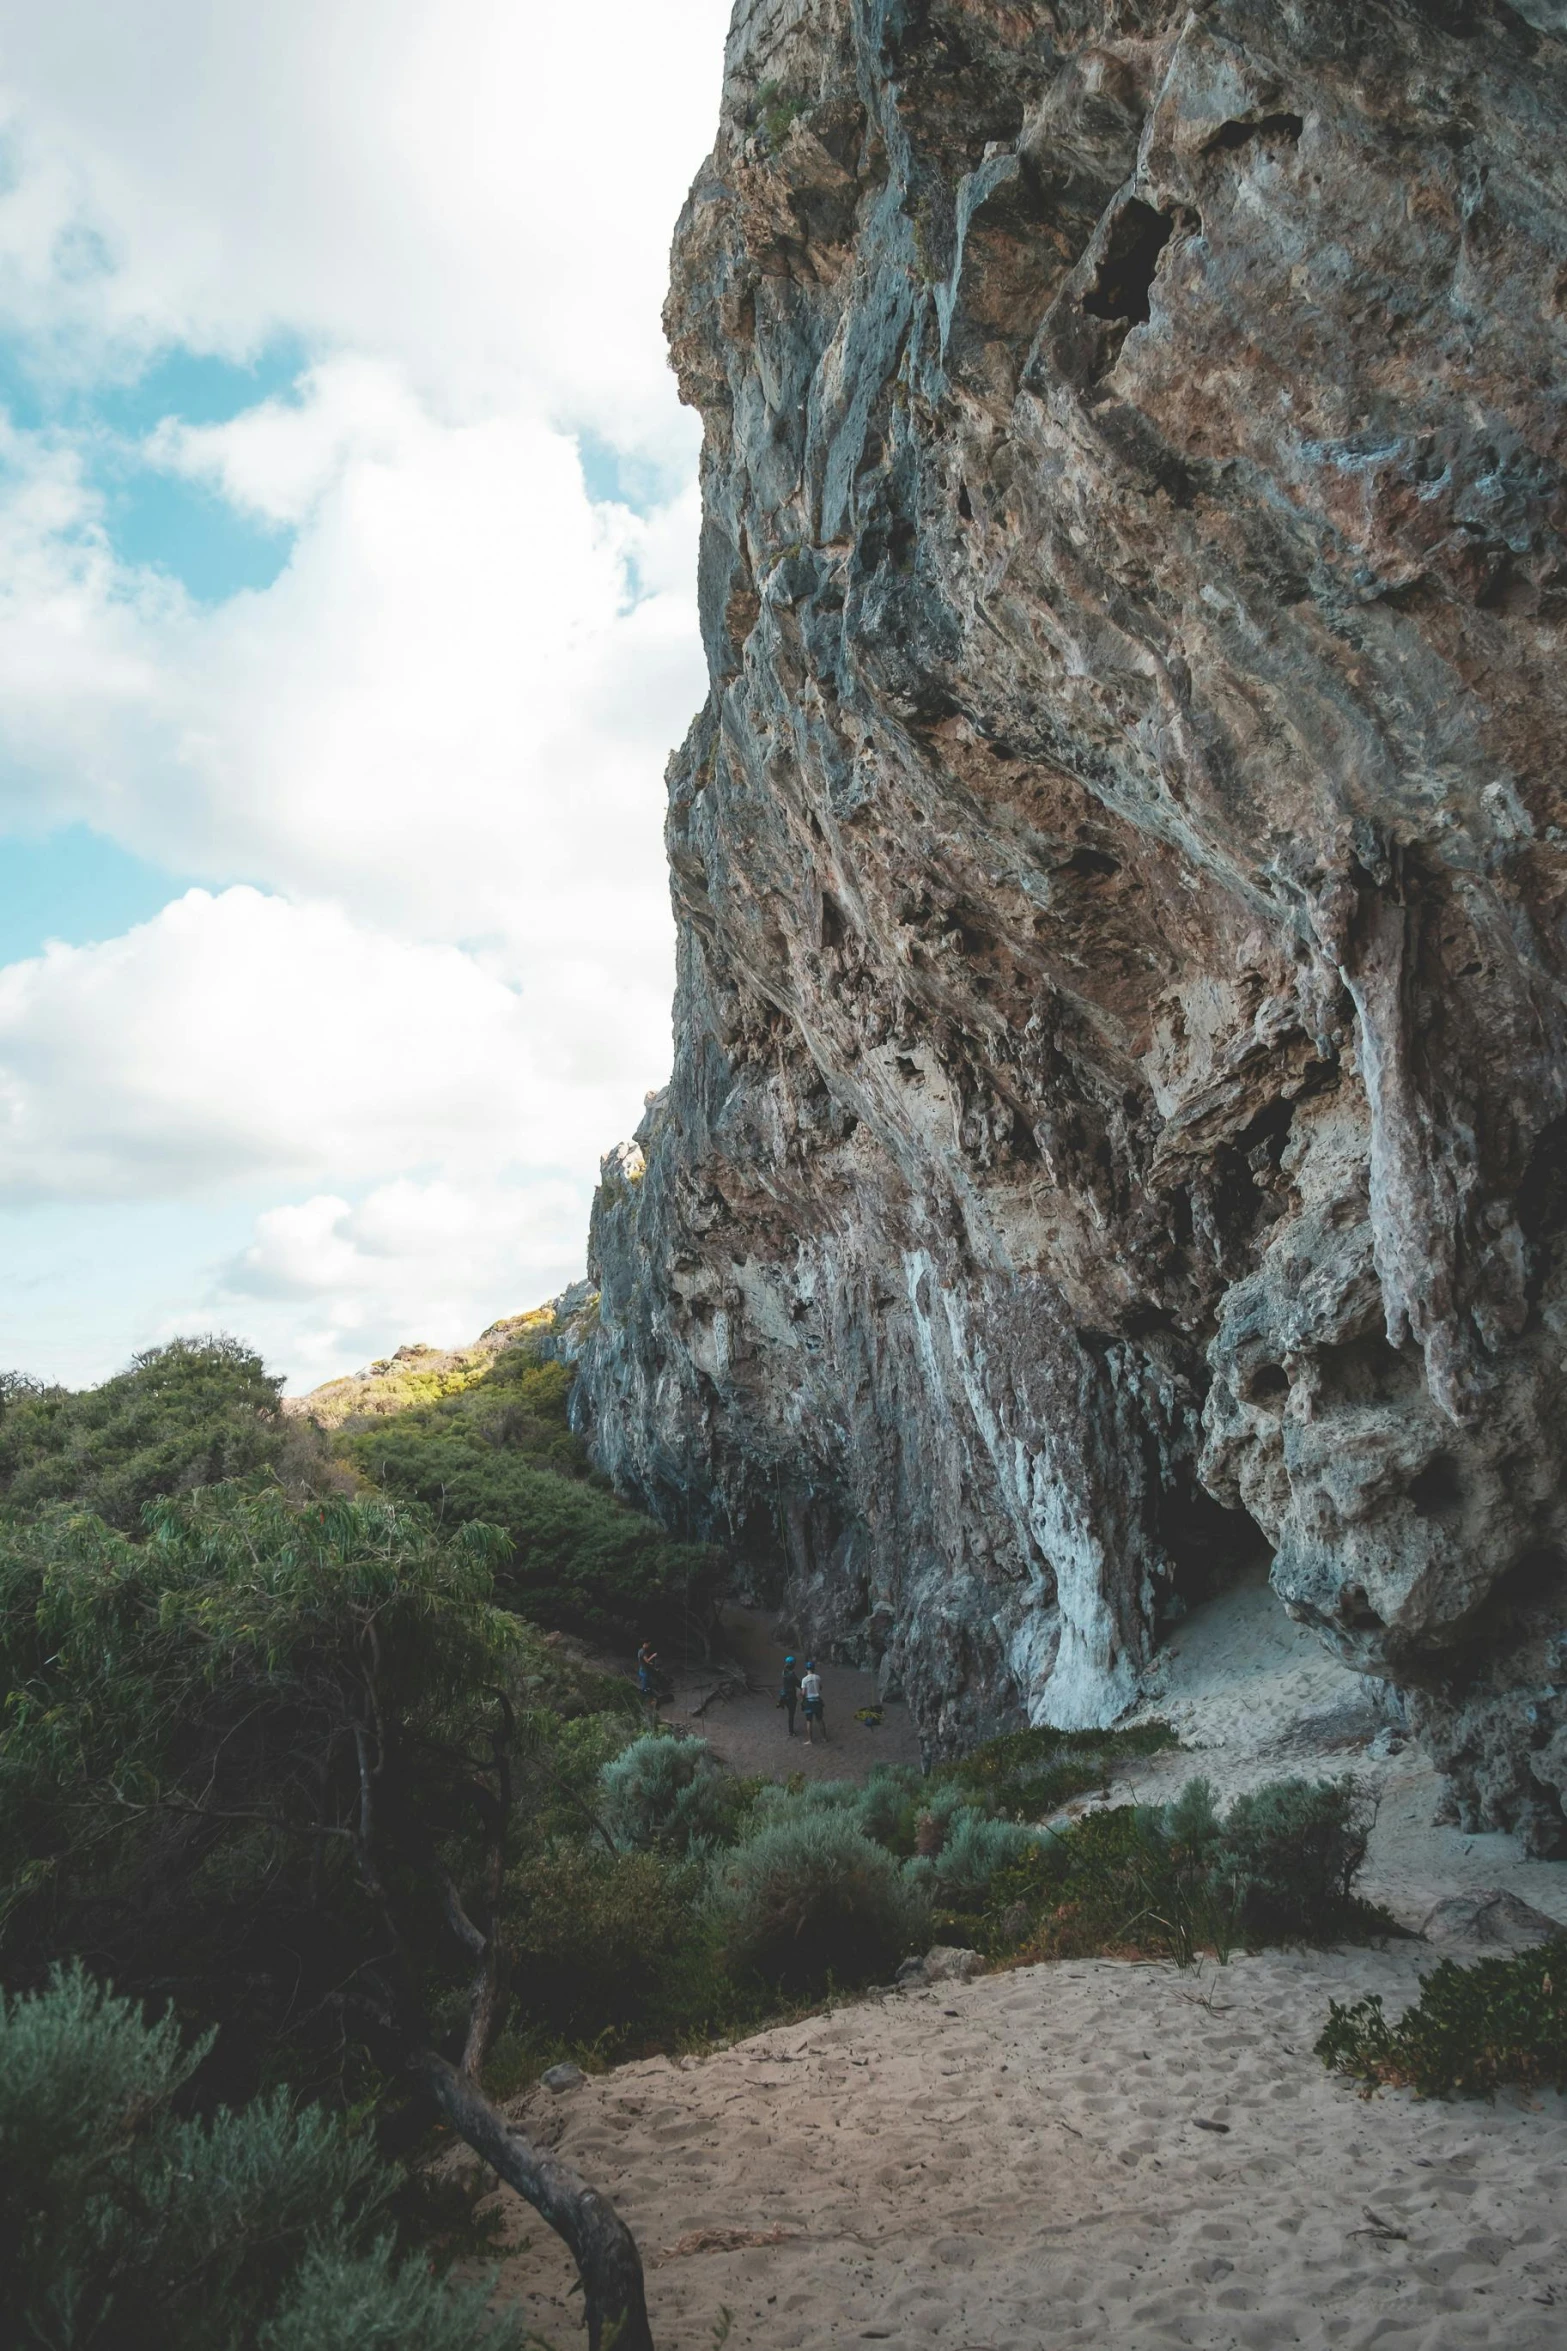 a man standing on top of a sandy beach next to a cliff, speleothems, marbella landscape, sydney park, rock climbers climbing a rock